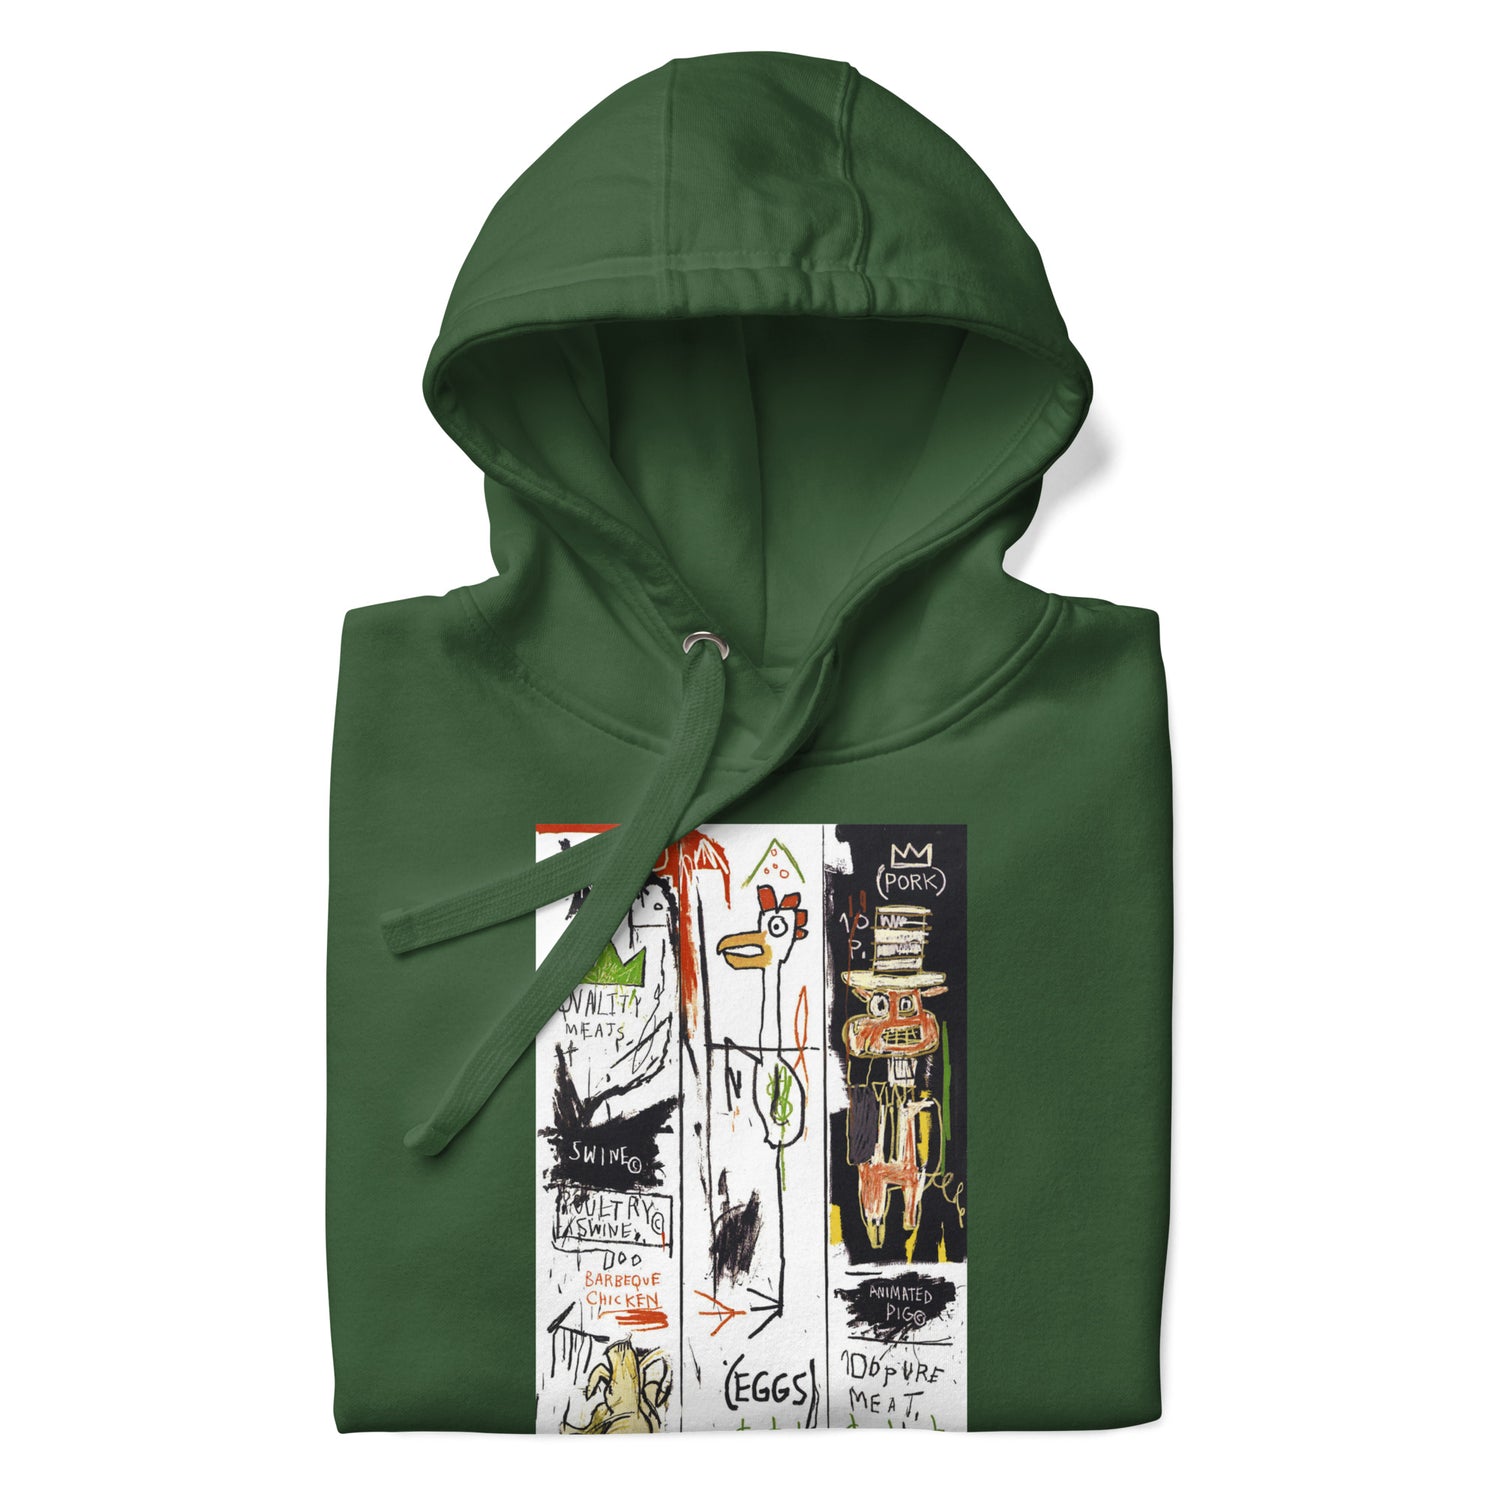 Jean-Michel Basquiat "Quality Meats for the Public" 1982 Artwork Printed Premium Streetwear Sweatshirt Hoodie Forest Green